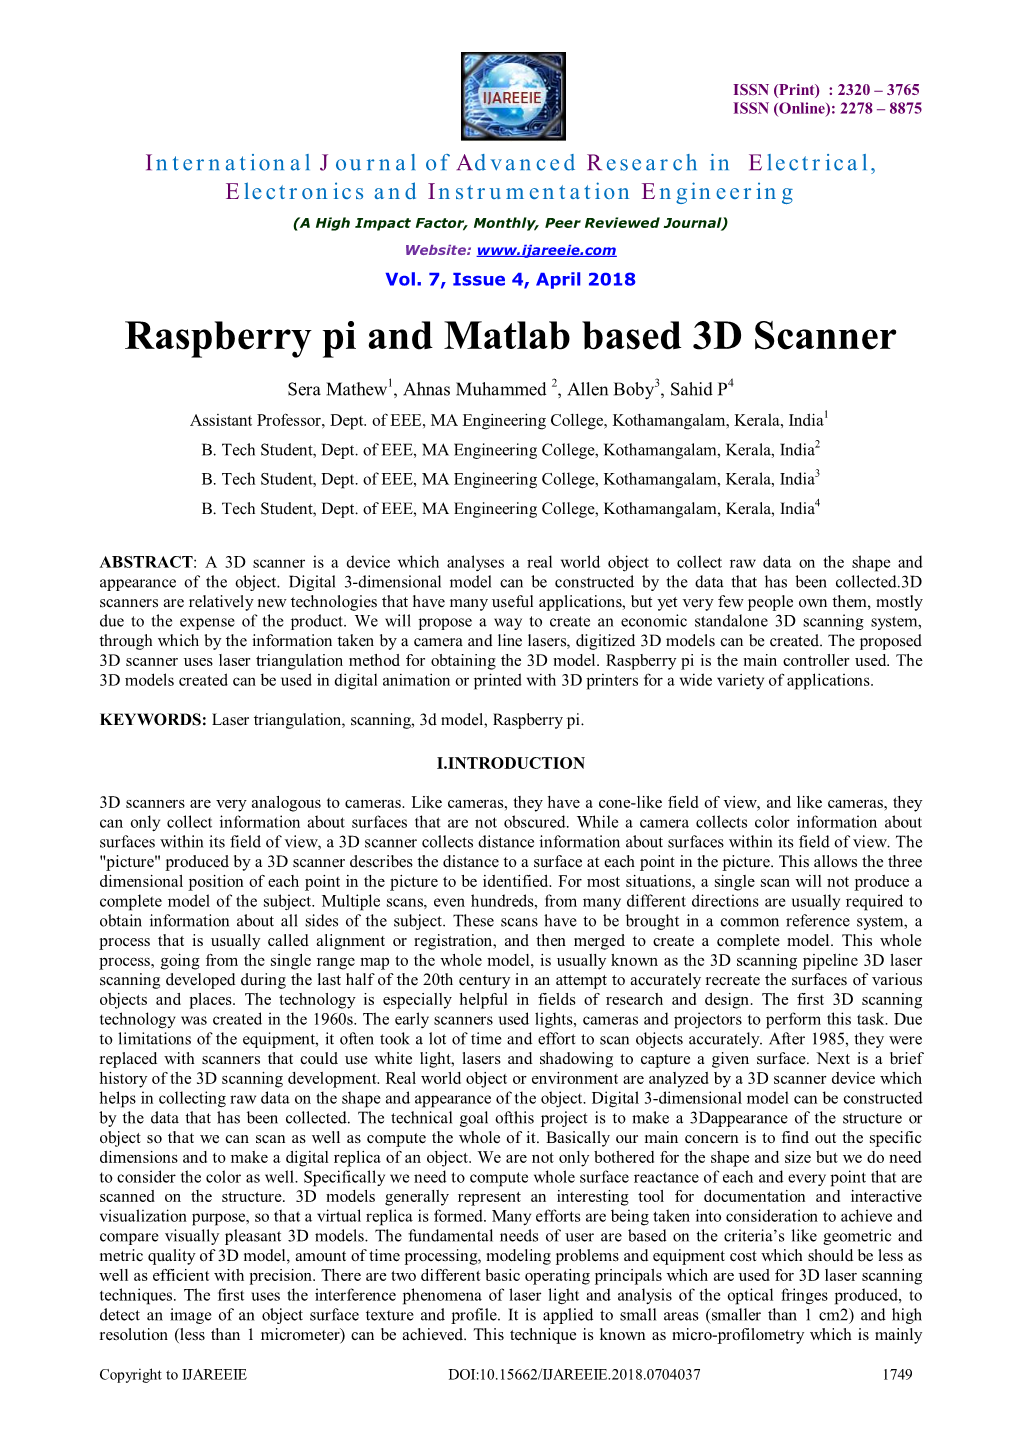 Raspberry Pi and Matlab Based 3D Scanner